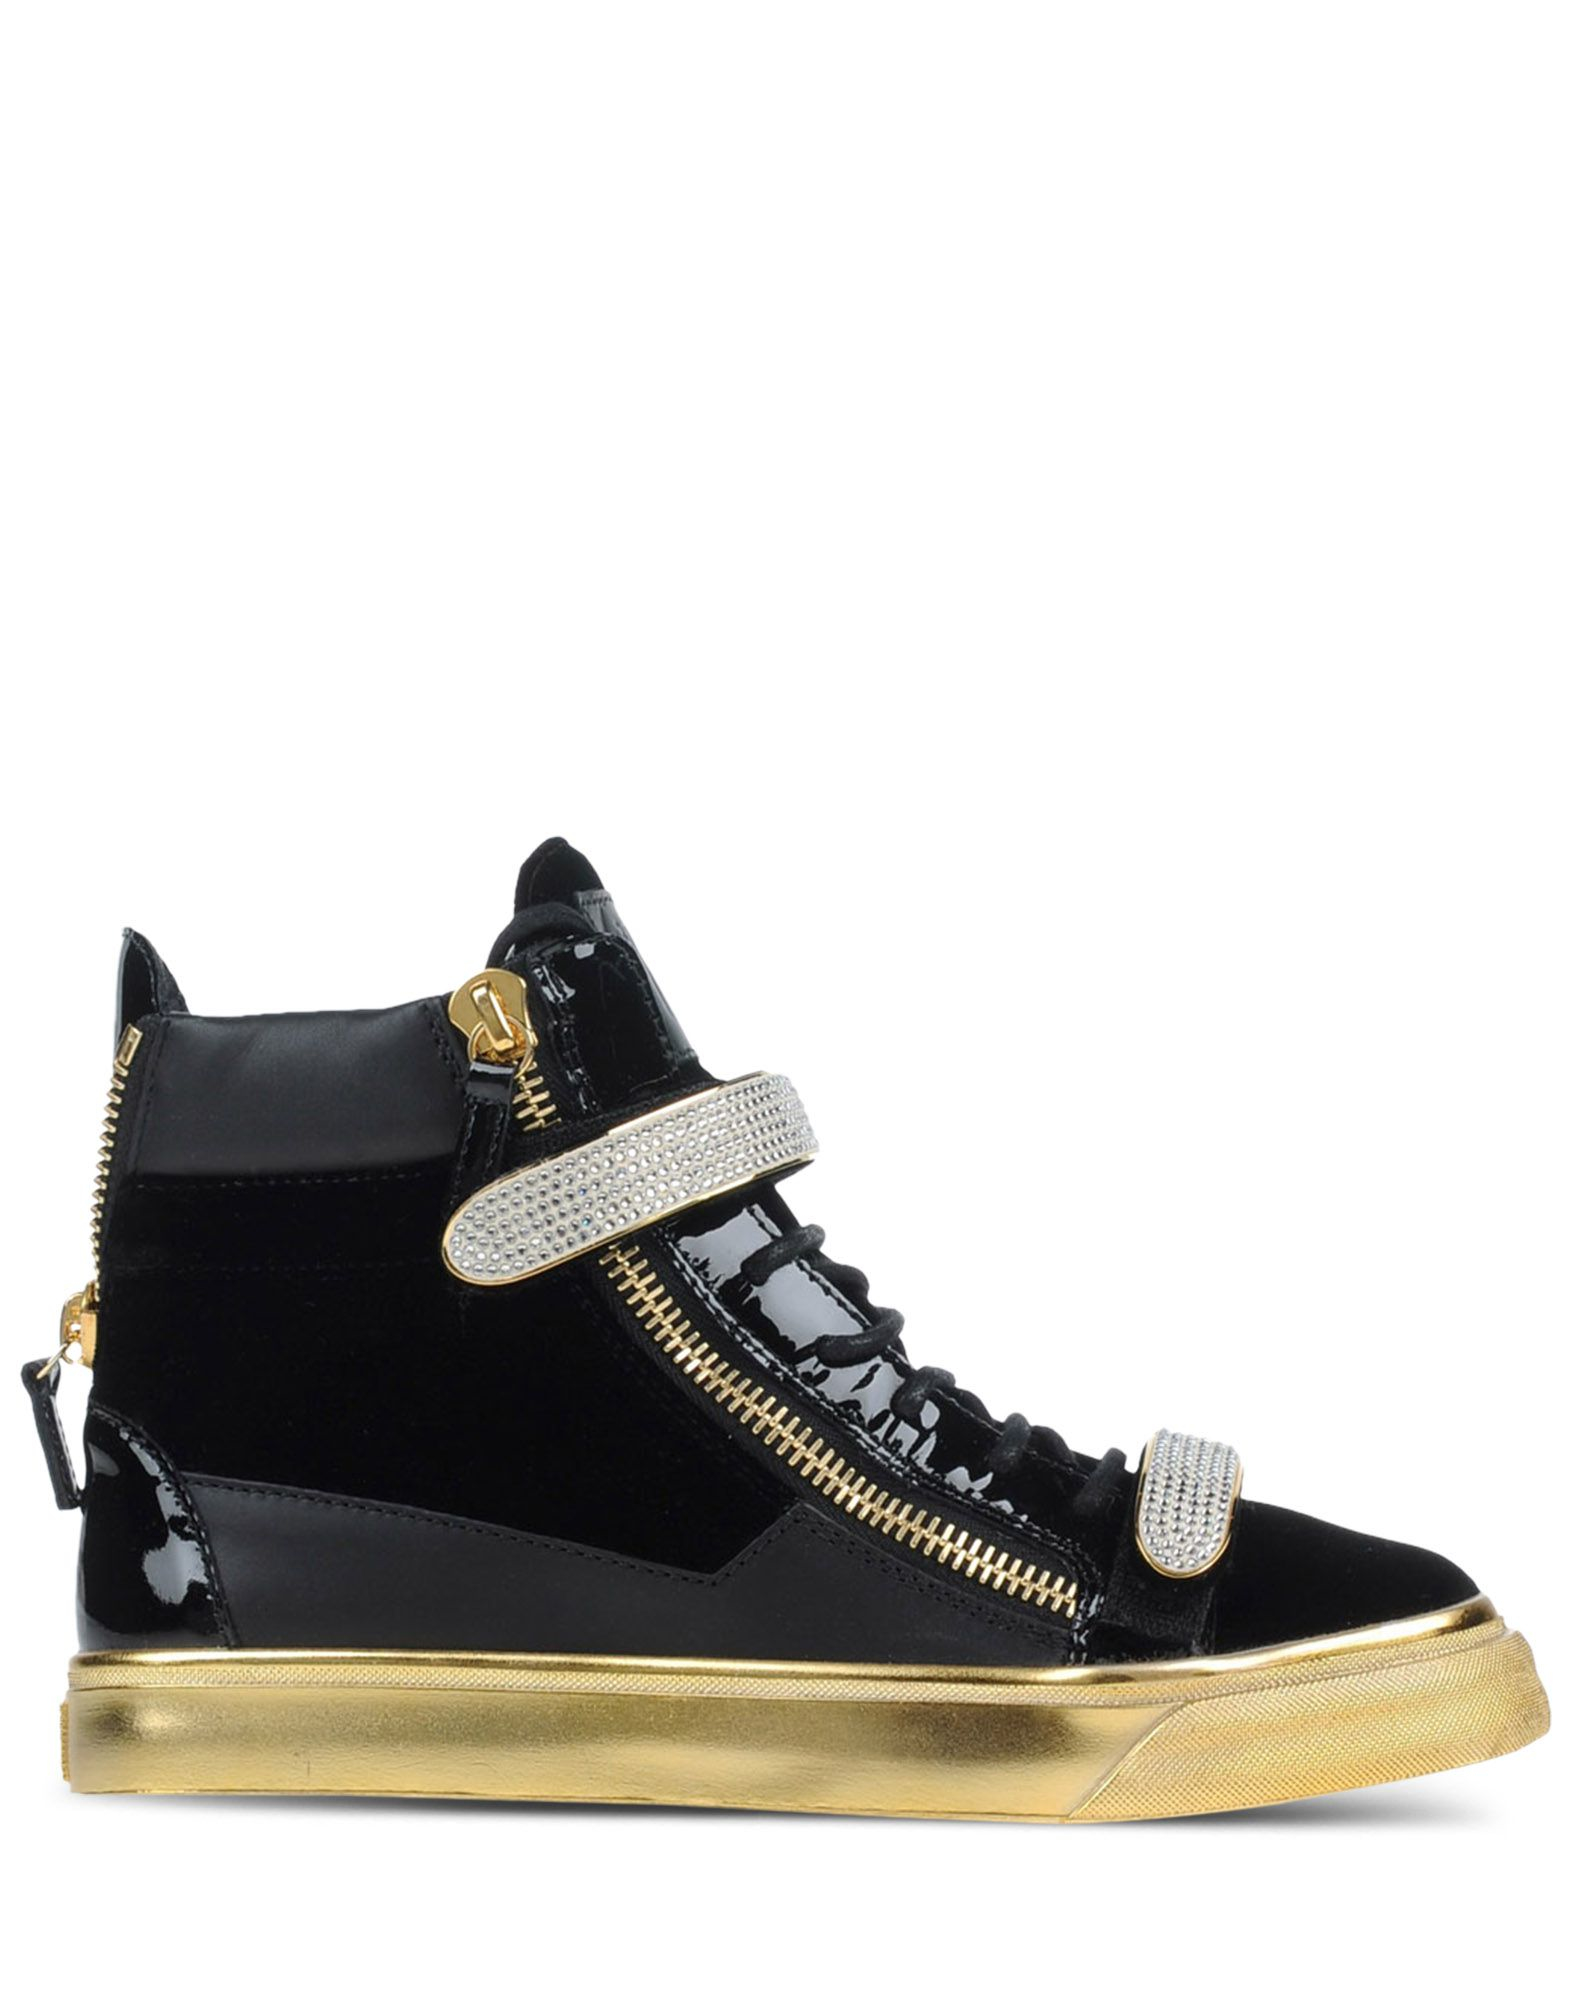 Giuseppe zanotti High-top Sneakers in Black (Gold) | Lyst